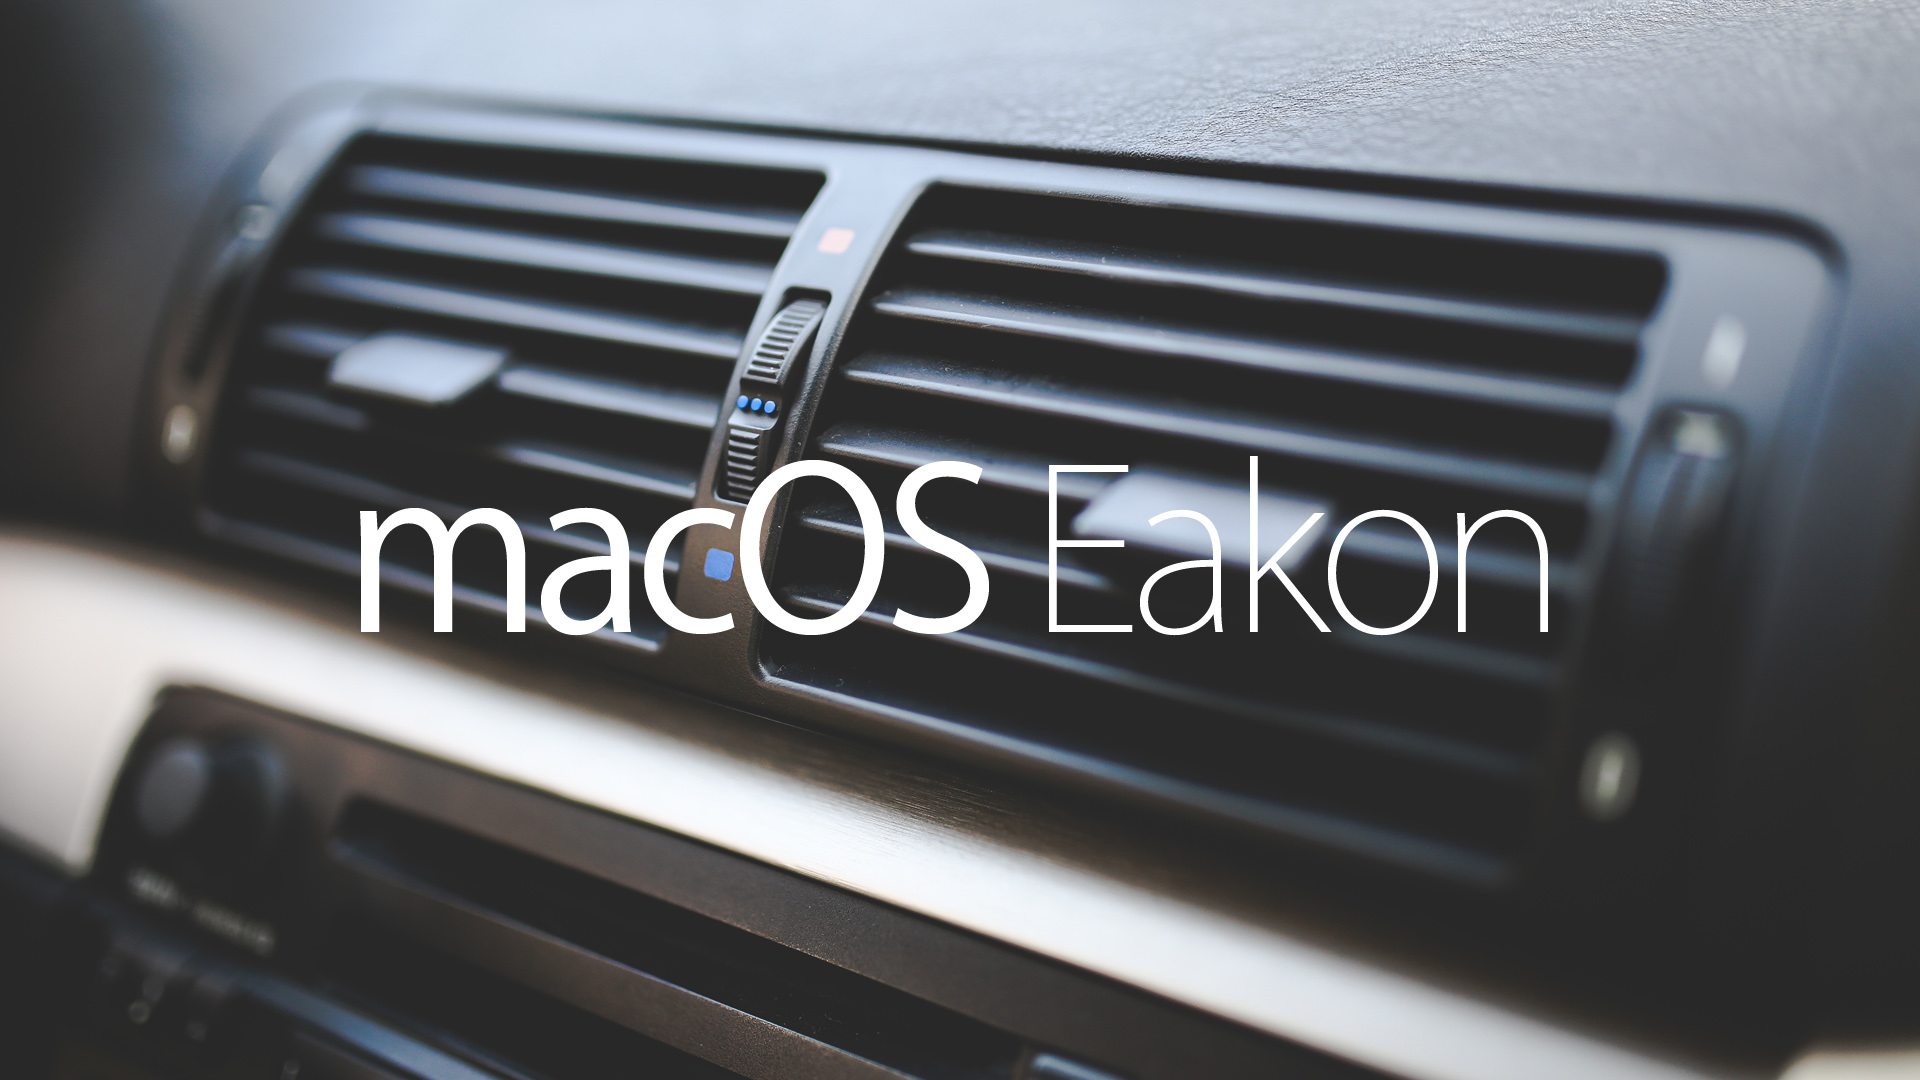 Mac OS Eakon